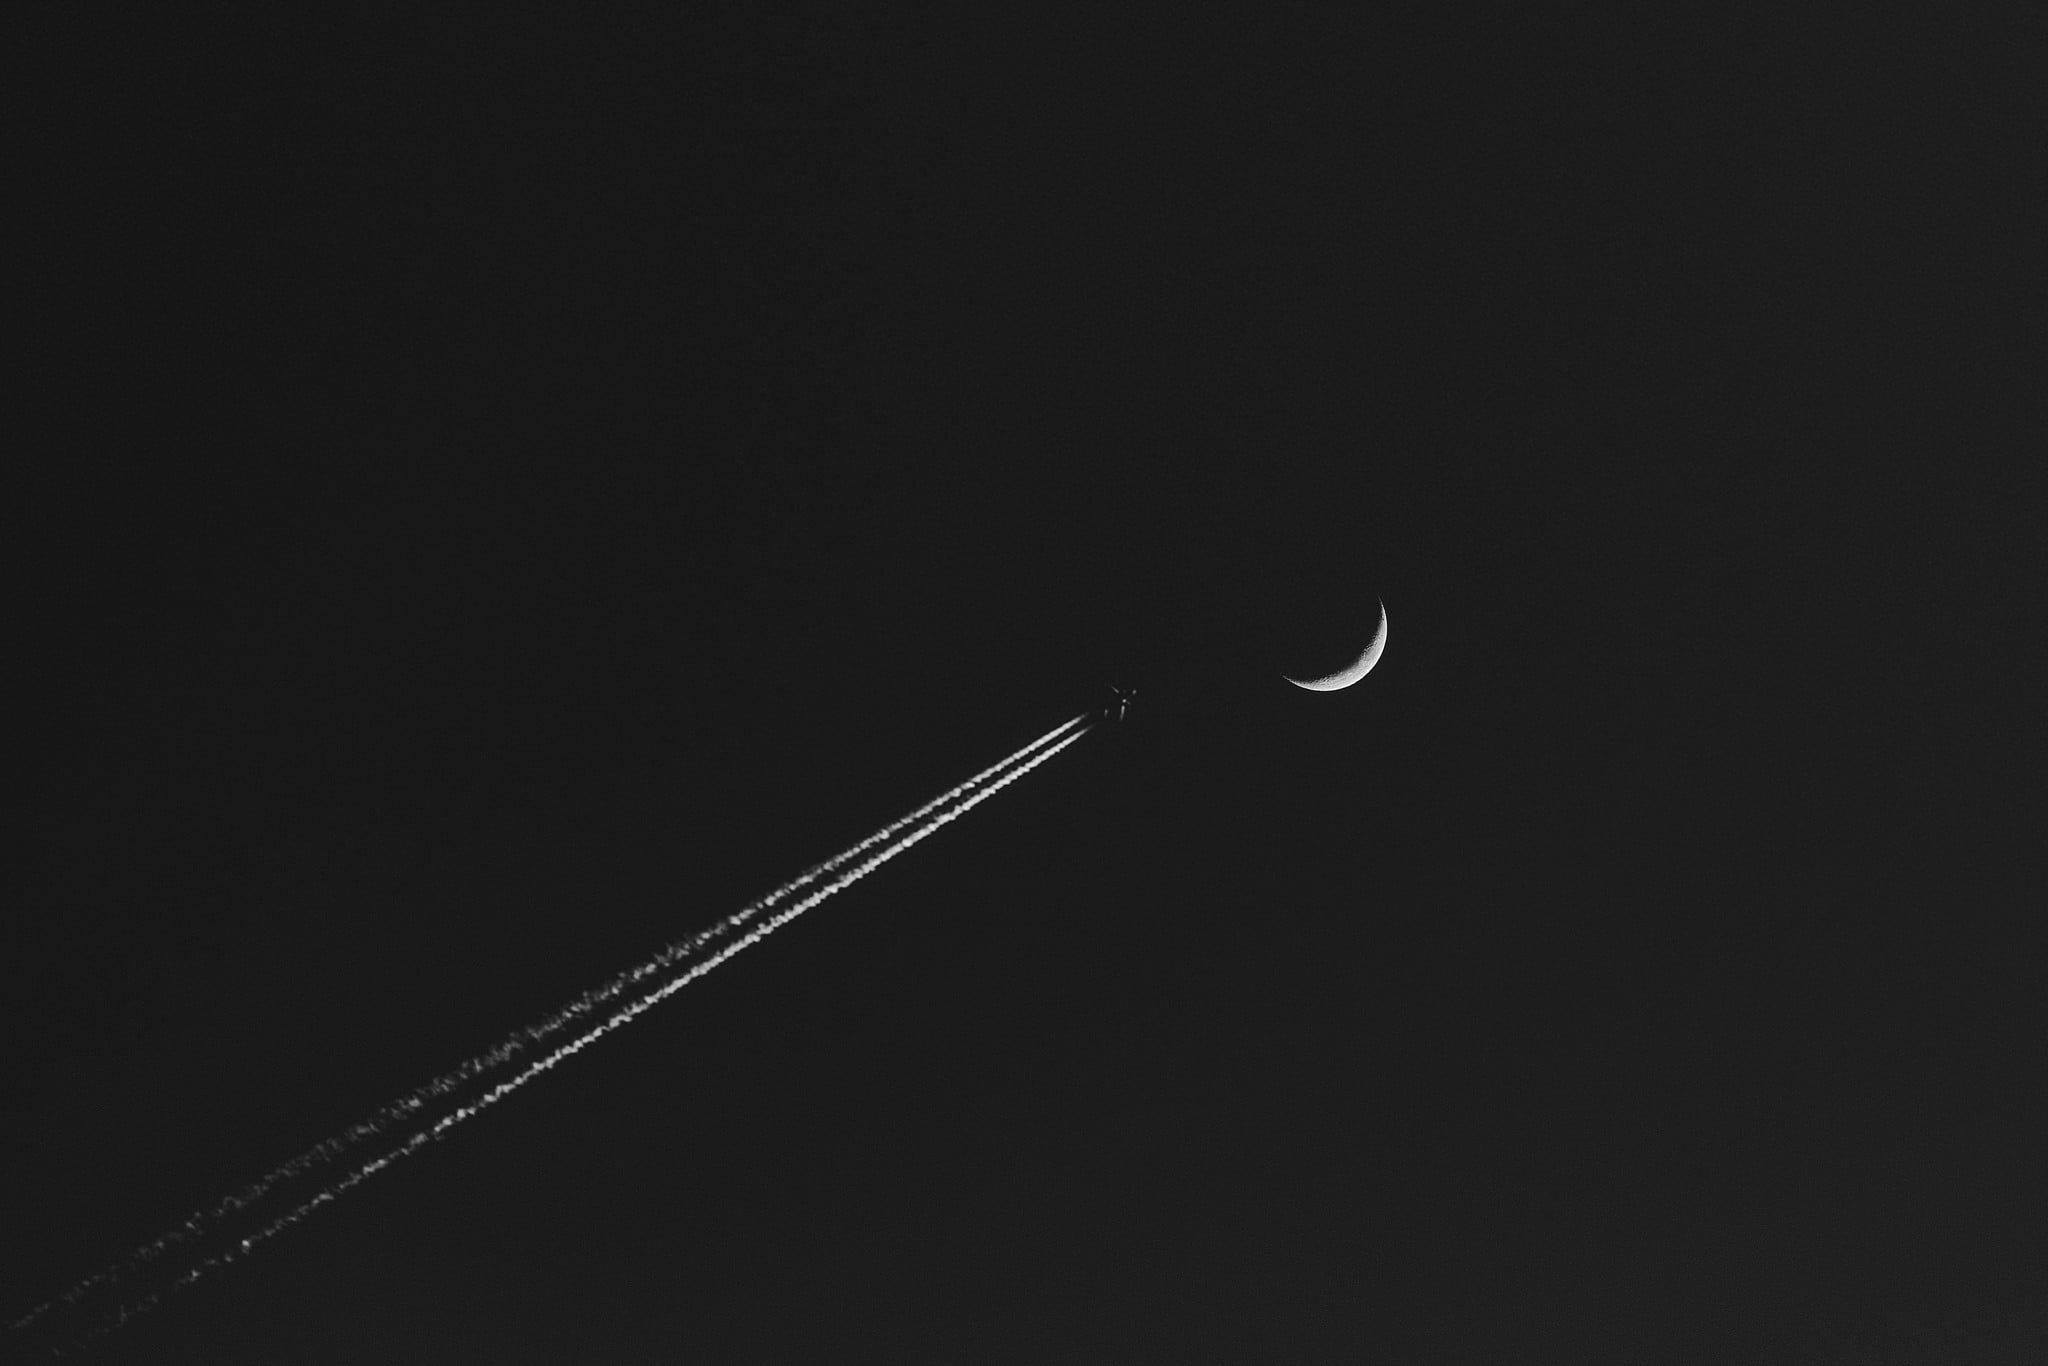 crescent moon, airplane, minimalism, monochrome, contrails, copy space